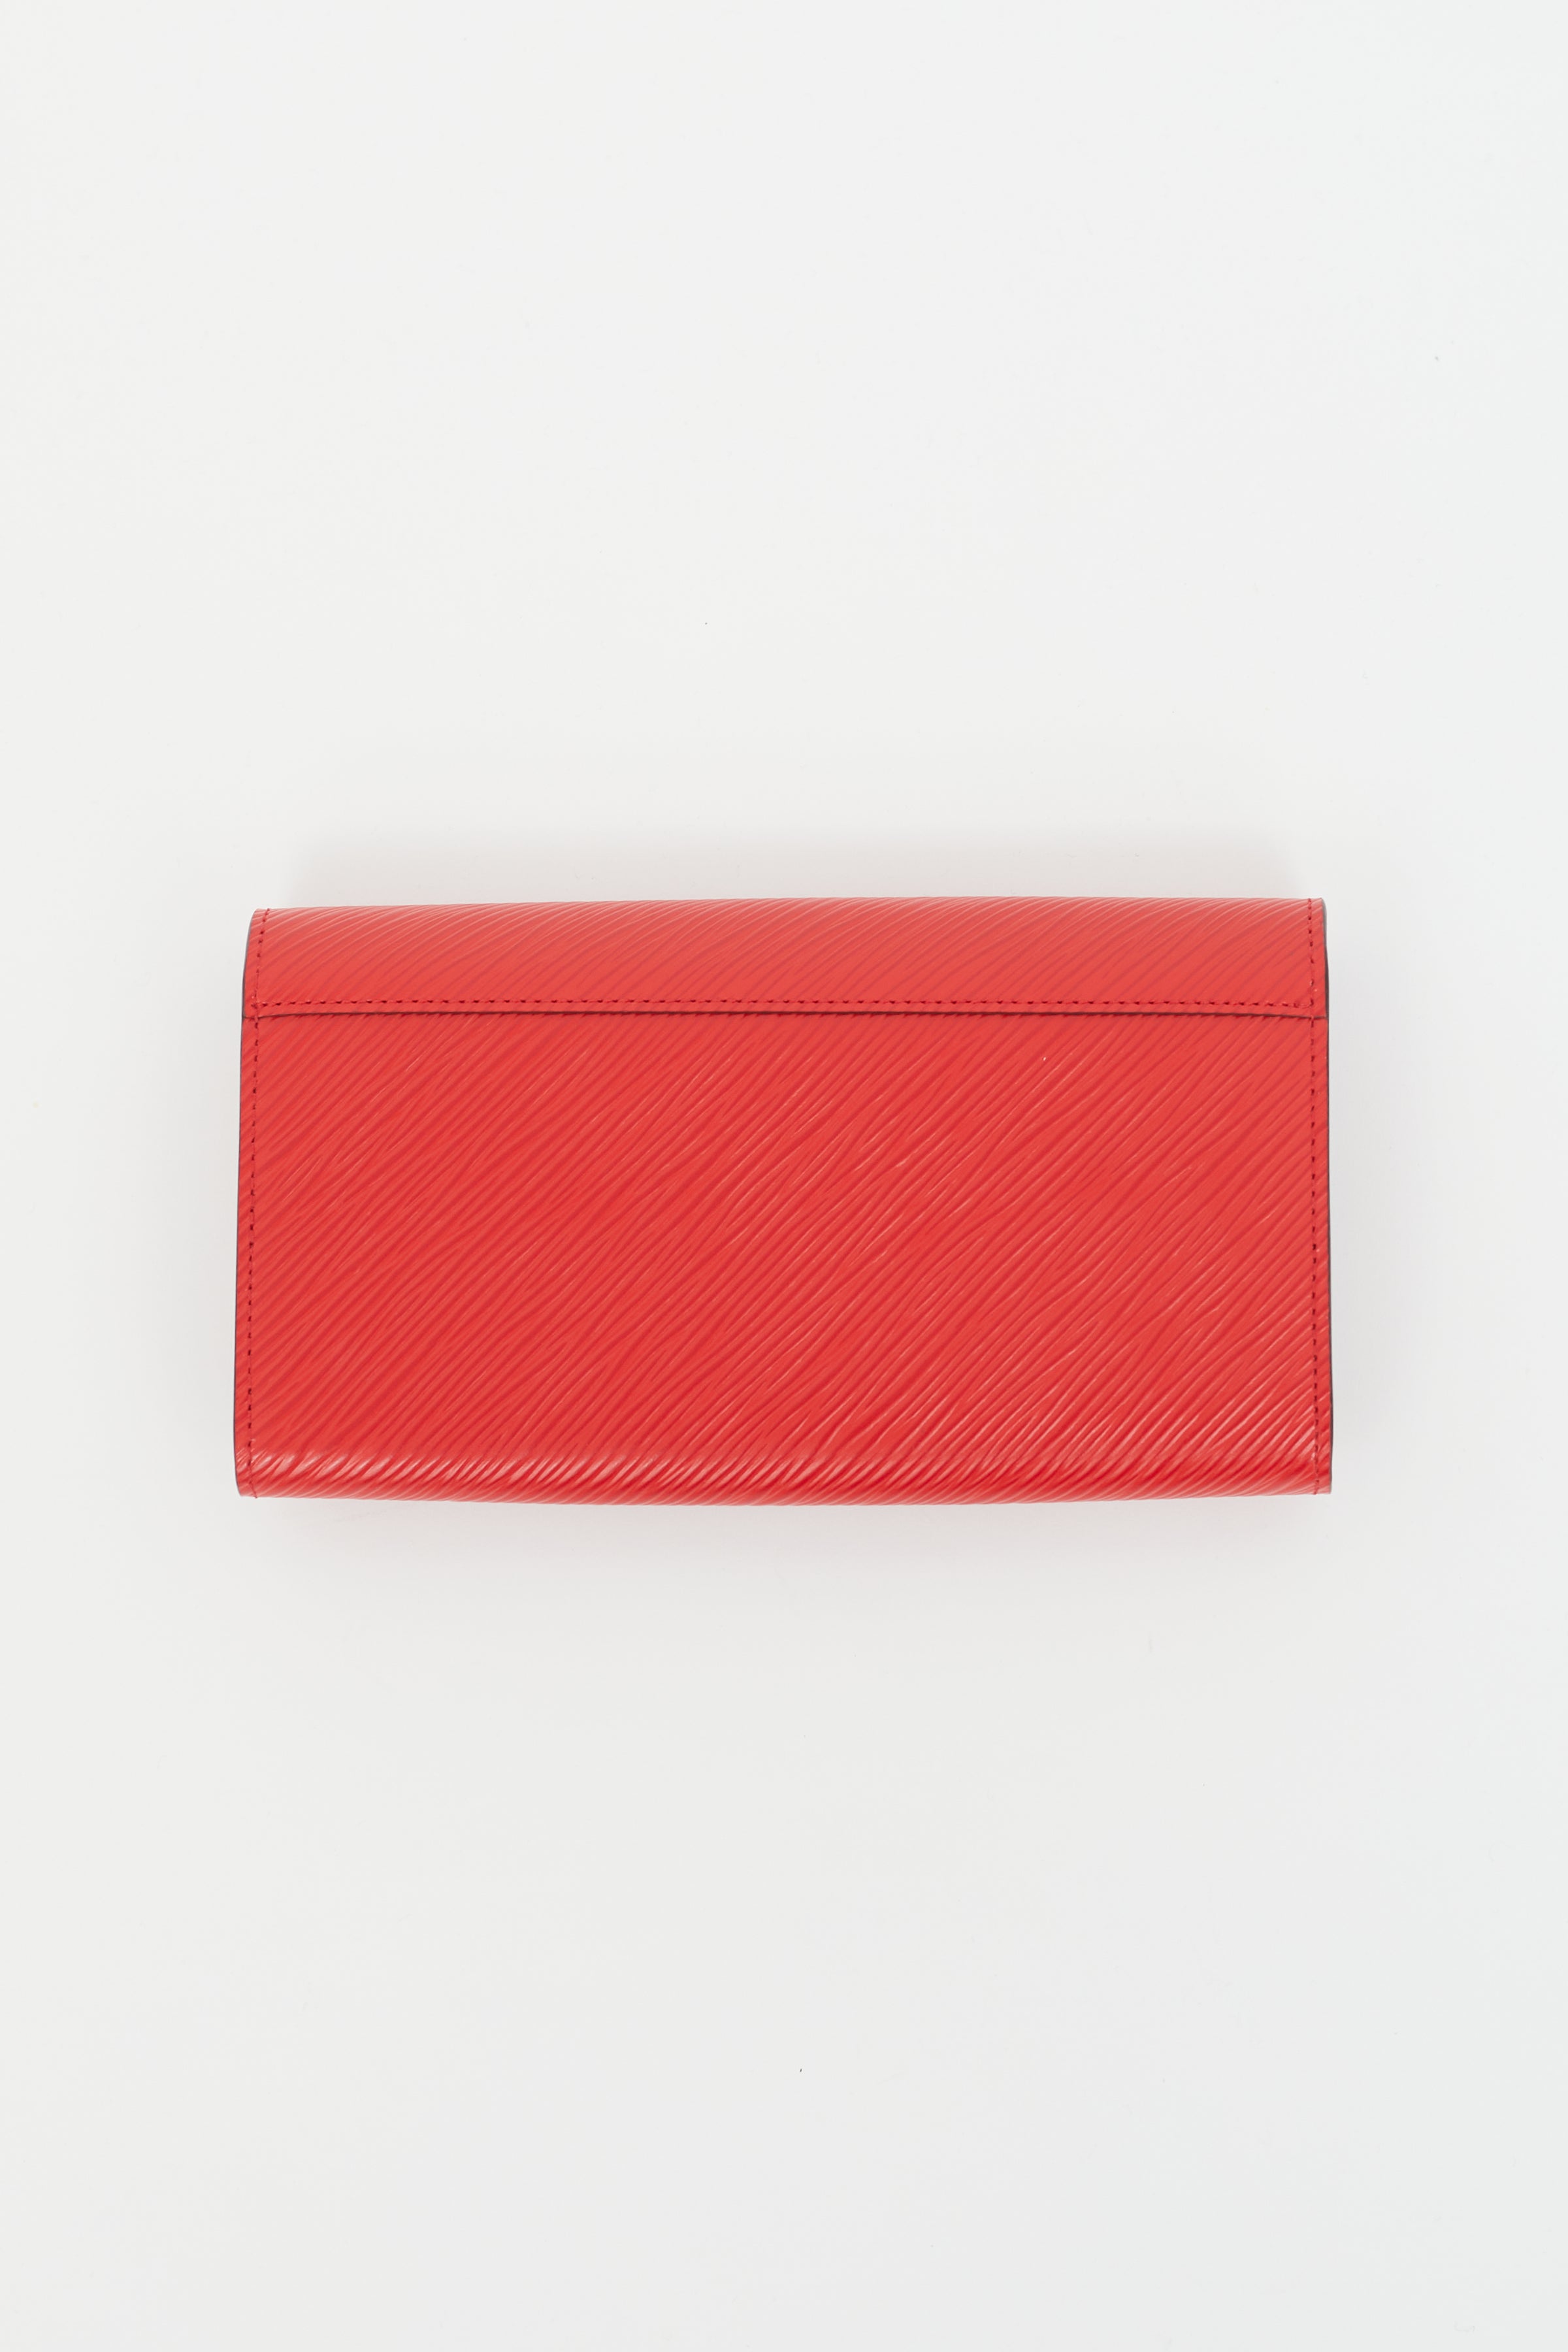 Louis Vuitton Pocket Organizer Wallet - Red EPI Leather